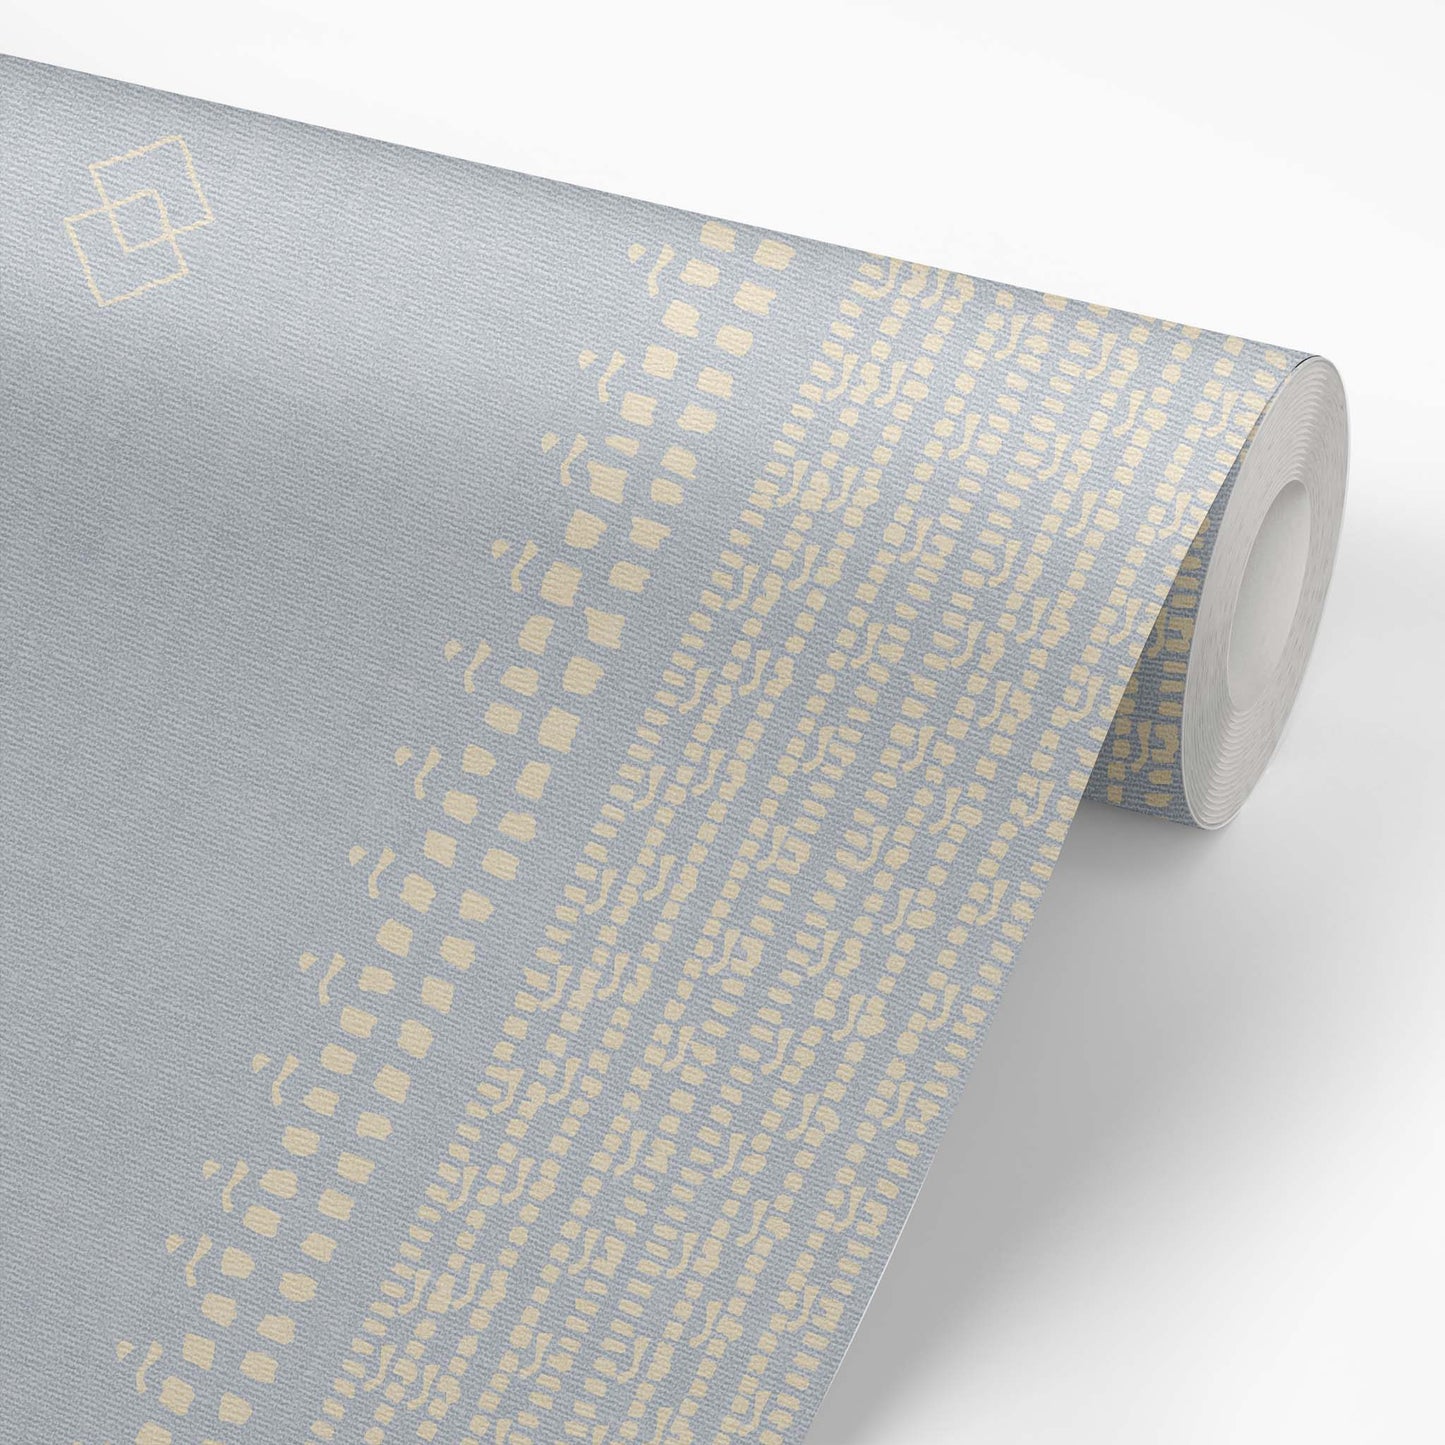 French Linen Stripes Wallpaper- Beige on Blue